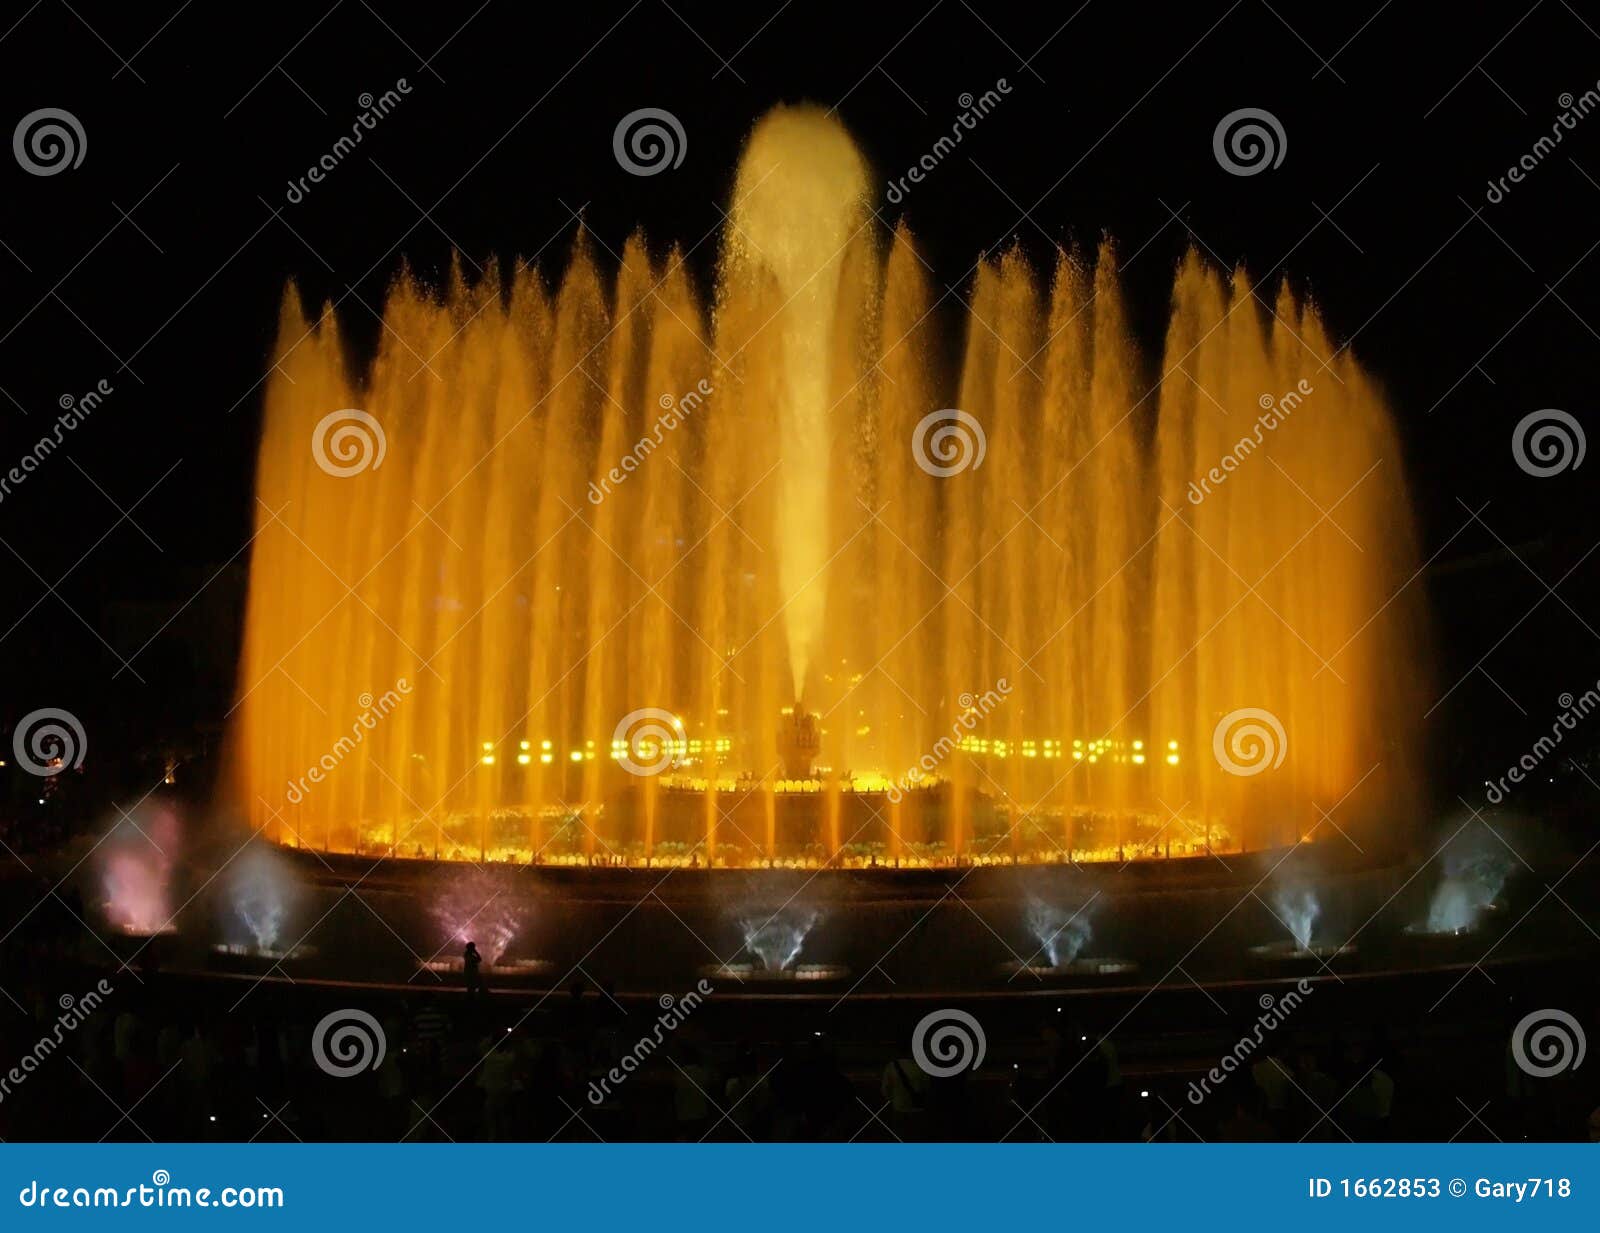 montjuic (magic) fountain in barcelona #6